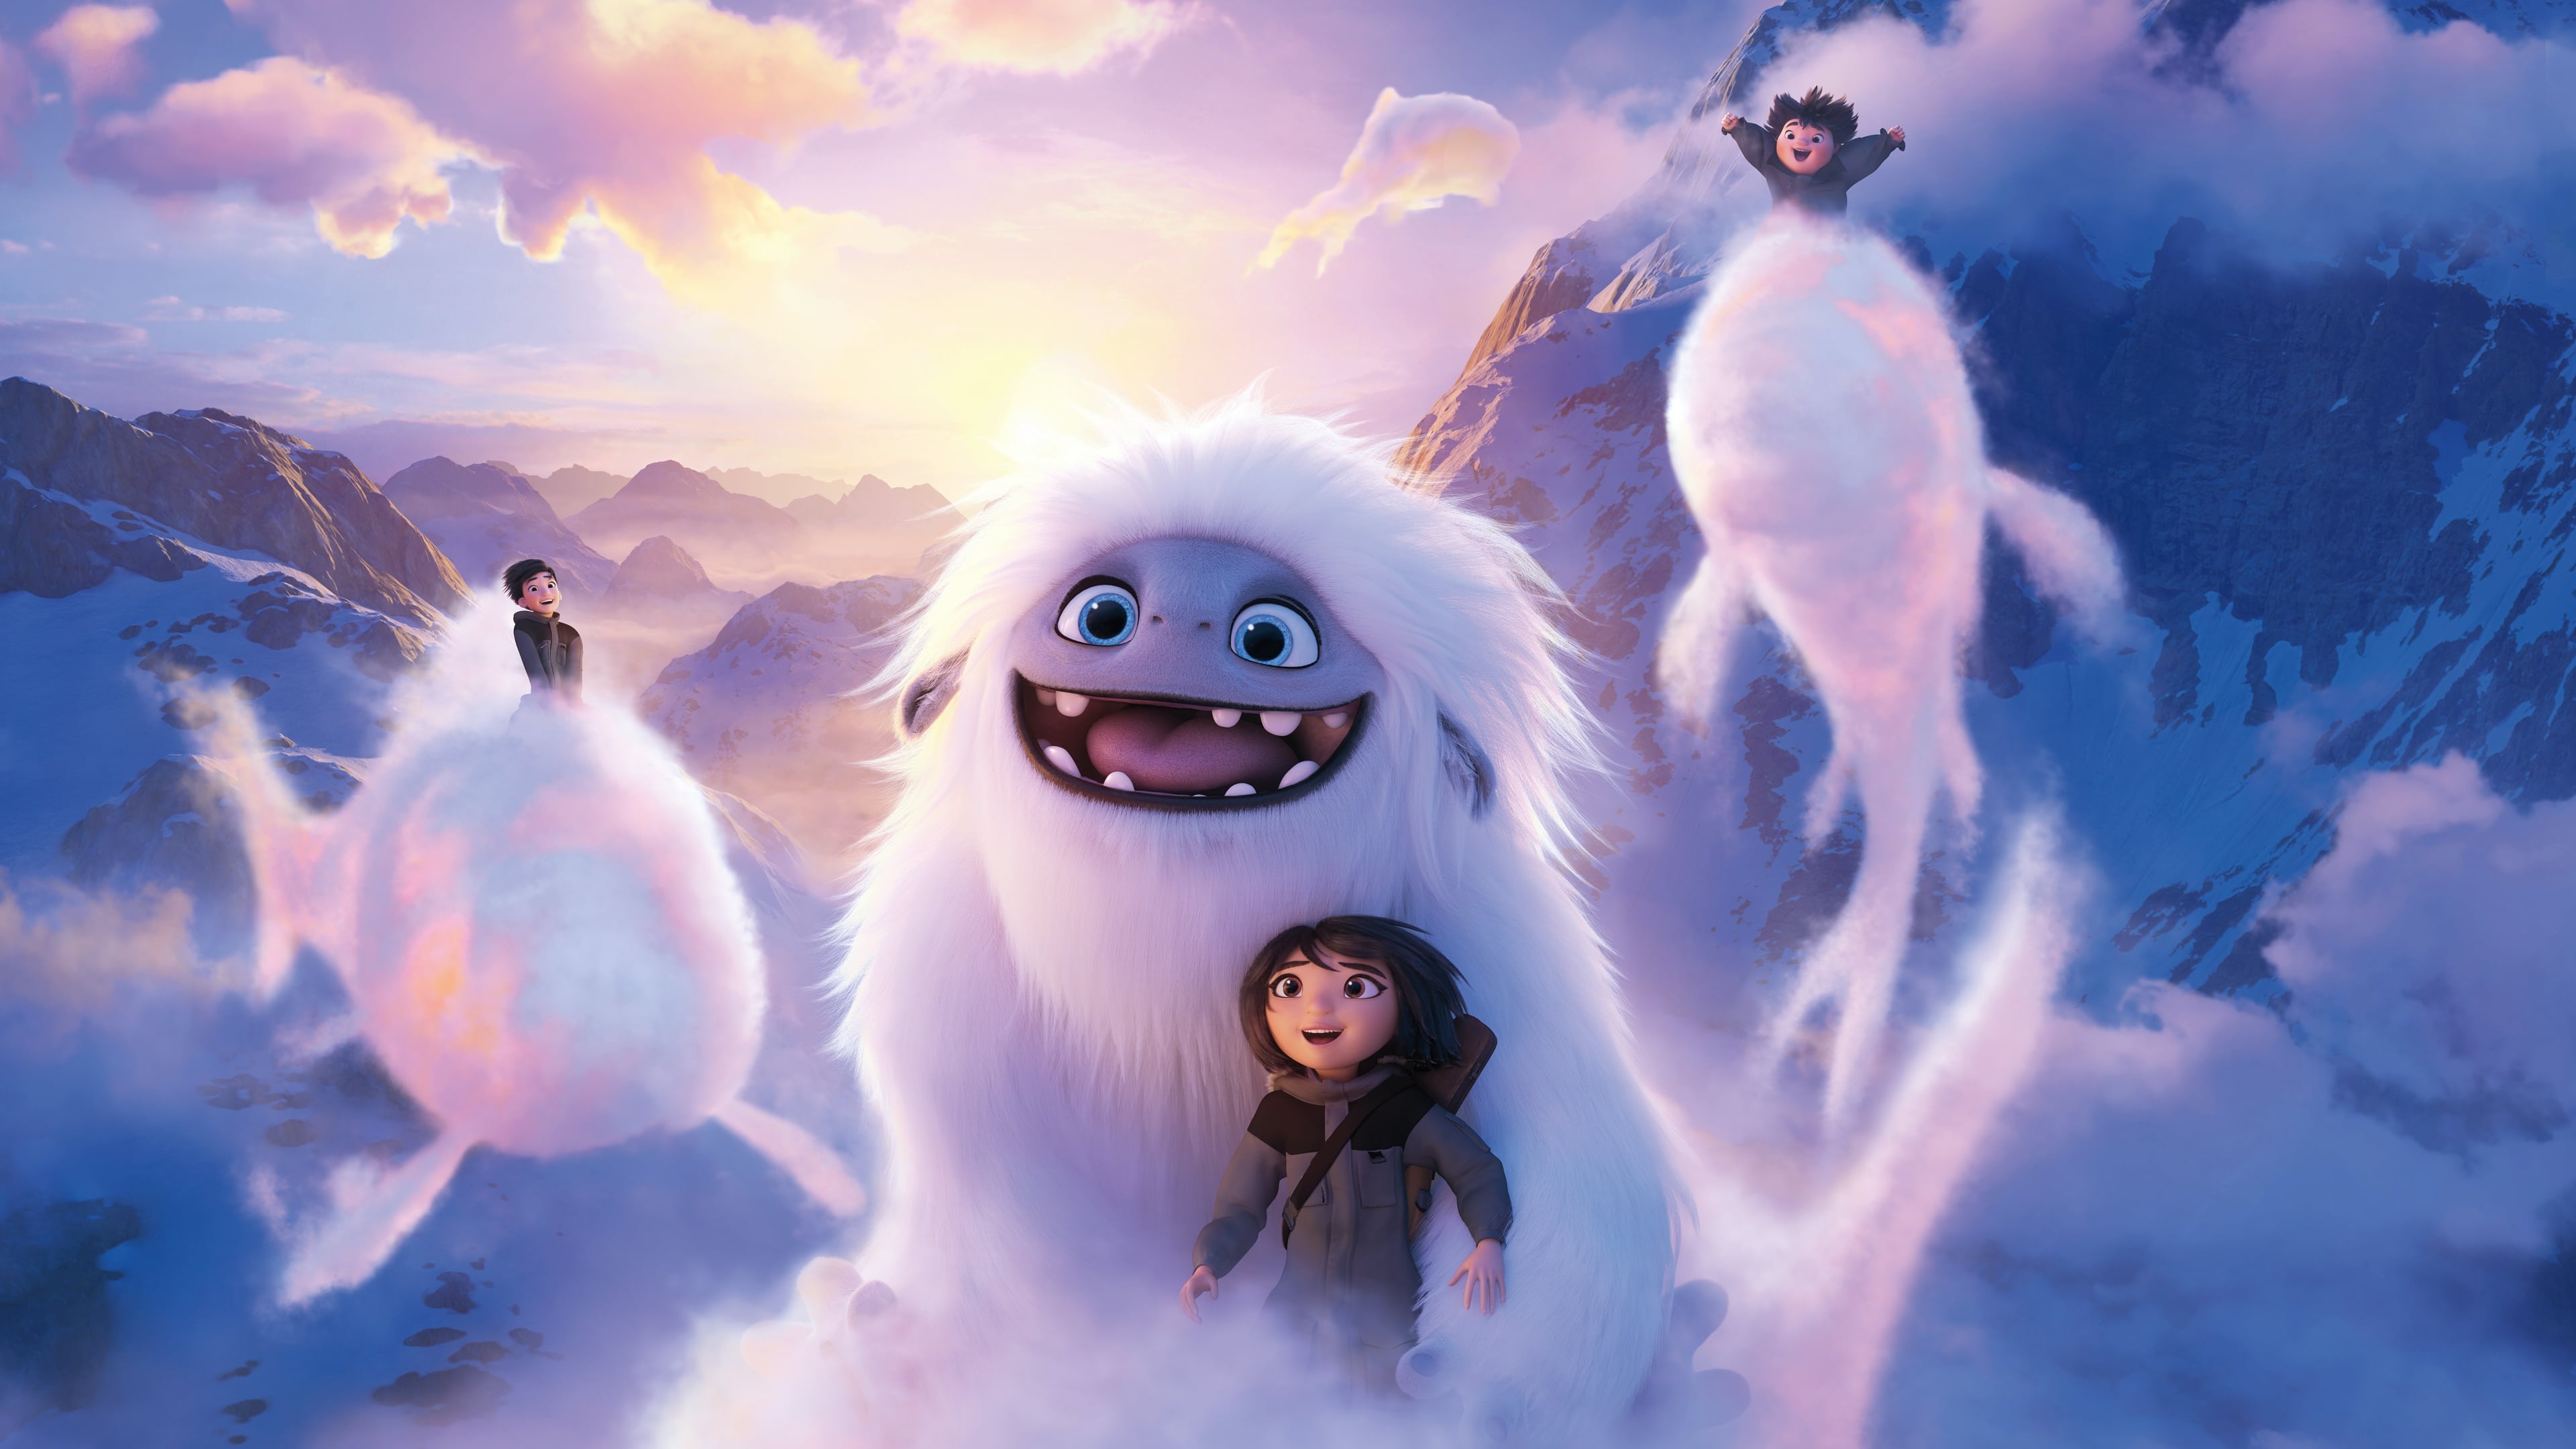 Poster Phim Everest: Người Tuyết Bé Nhỏ (Abominable)